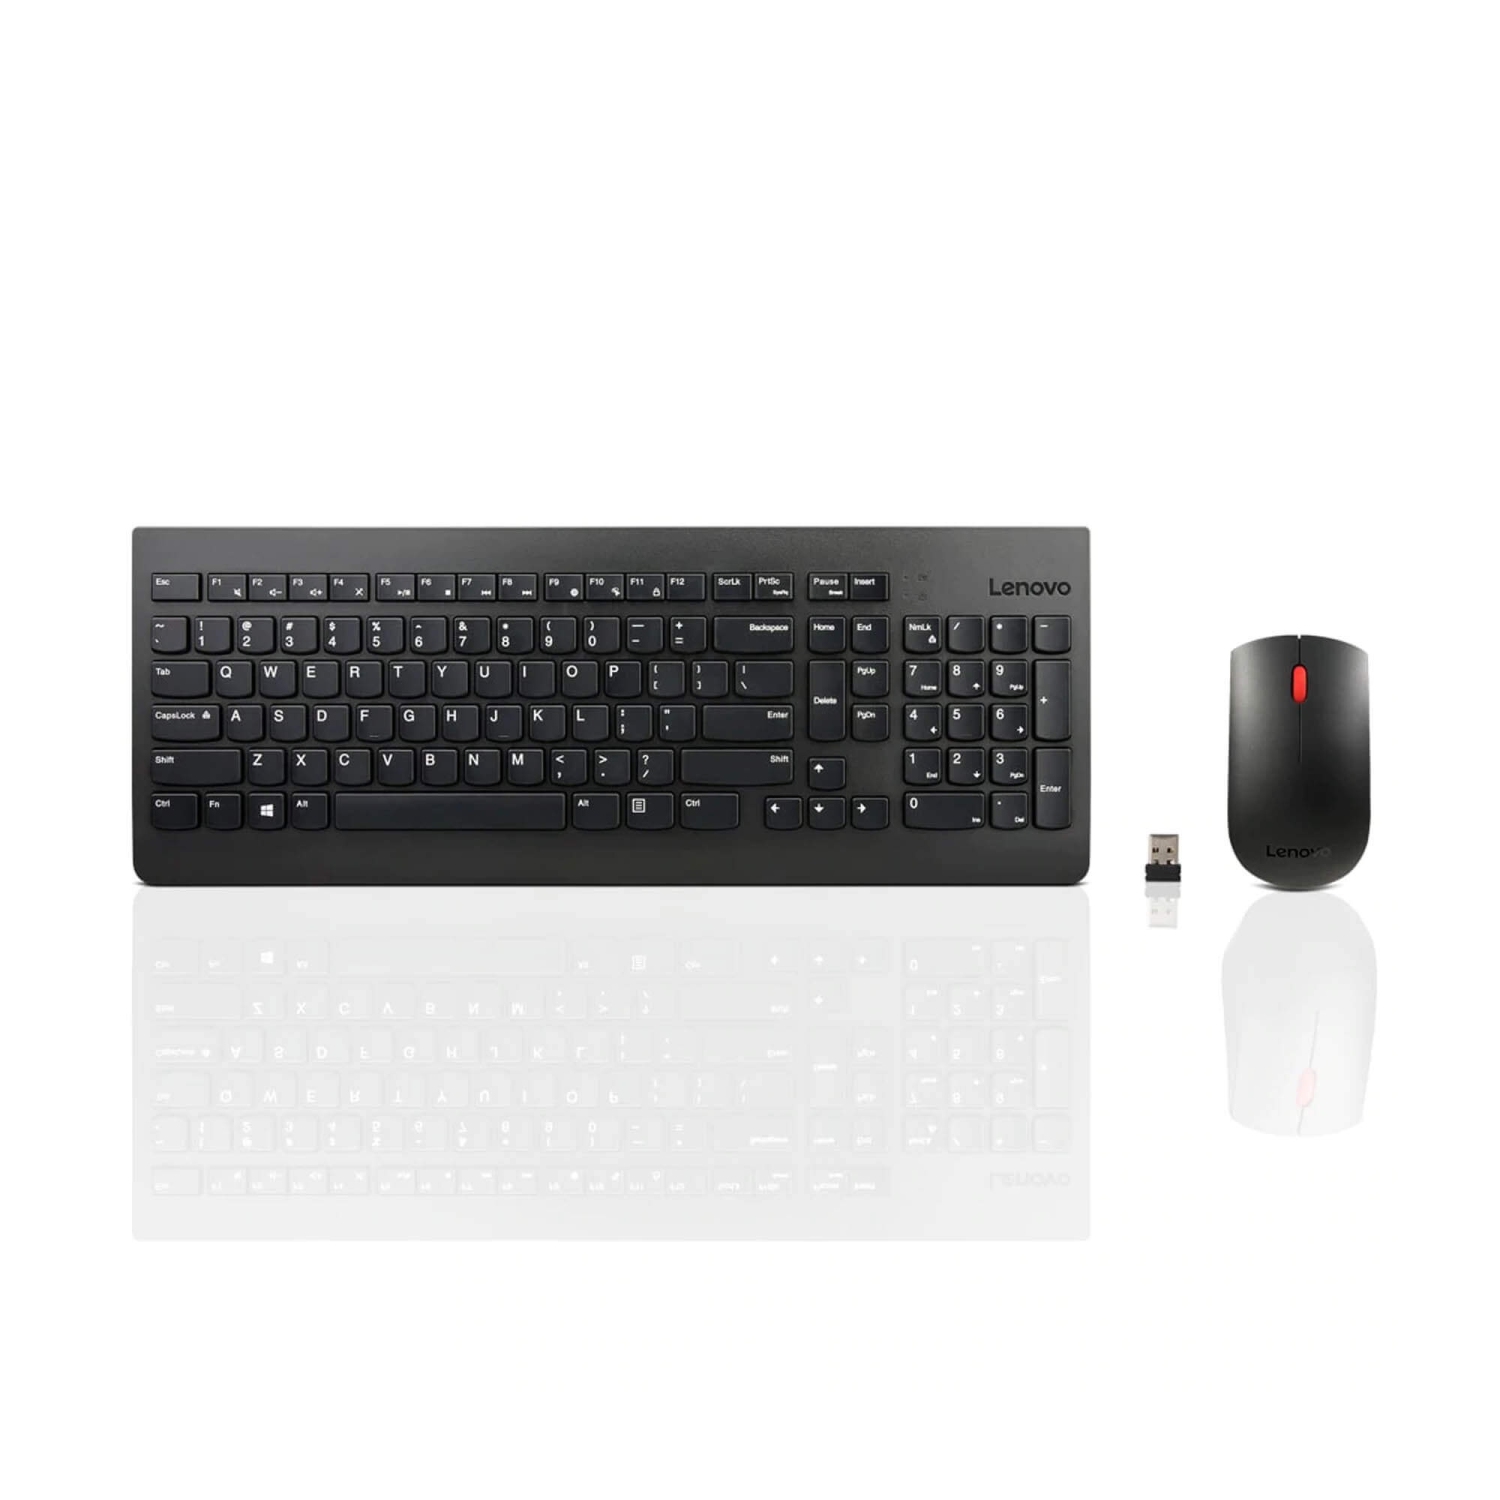 Lenovo 510 Wireless Keyboard Mouse Combo (GX30N81775)